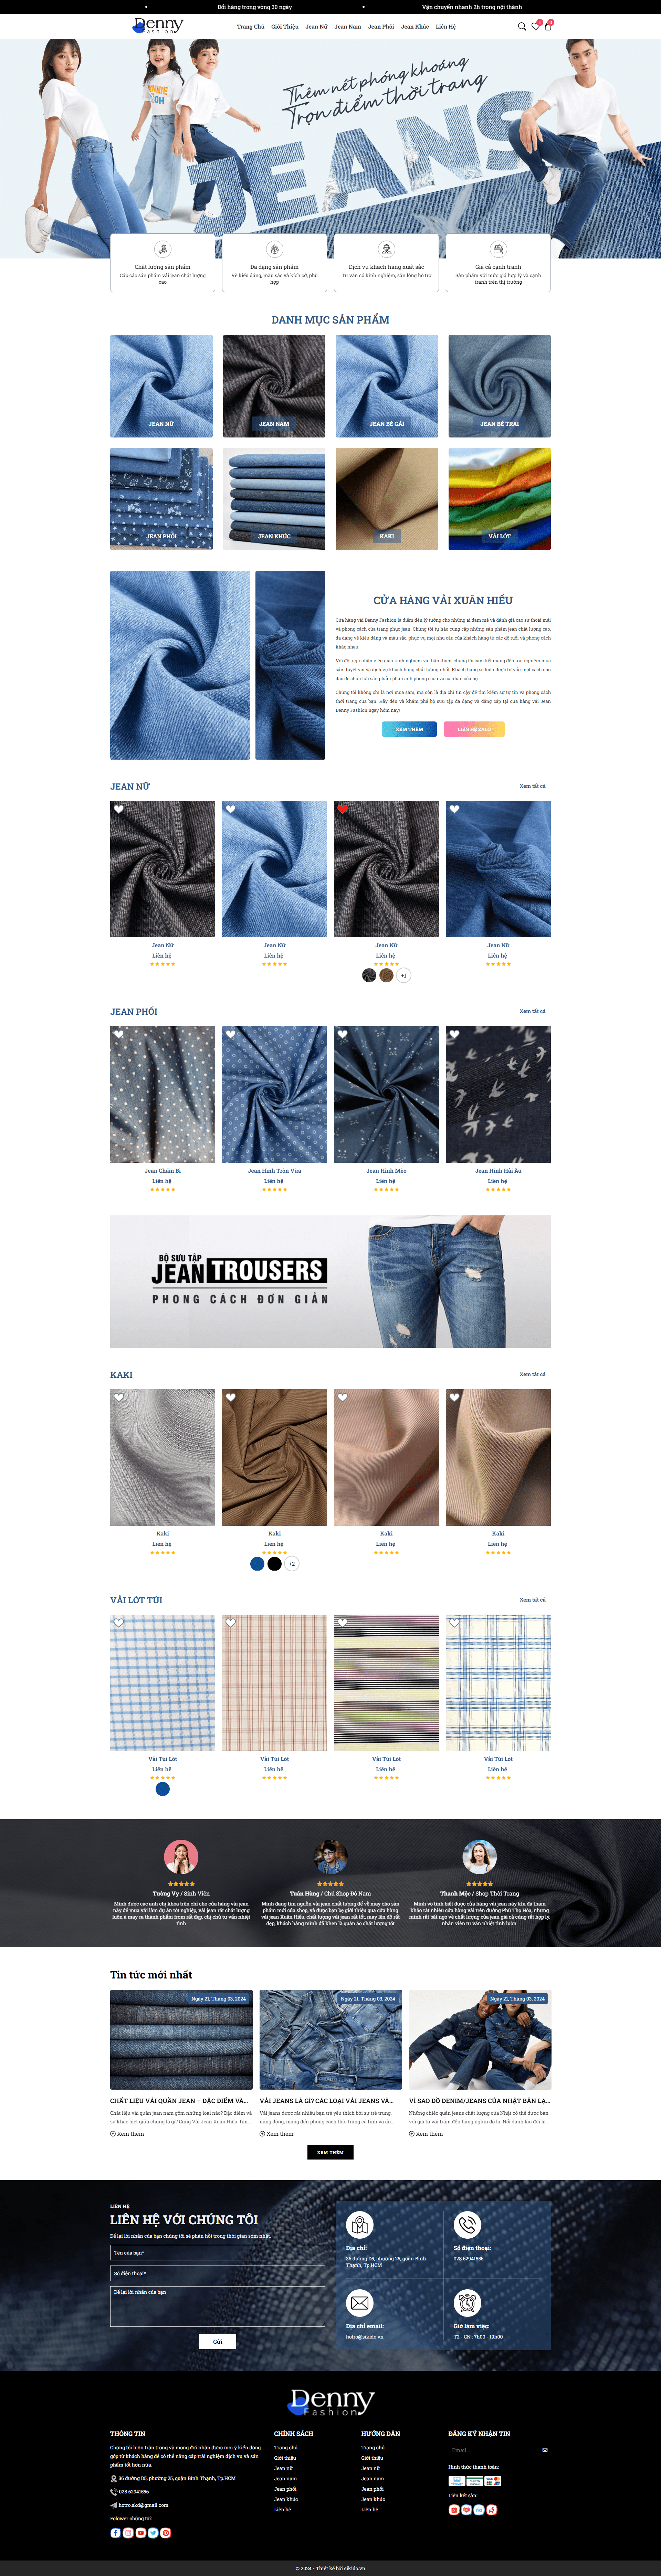 Website Cửa hàng phân phối vải Jean - demo 55